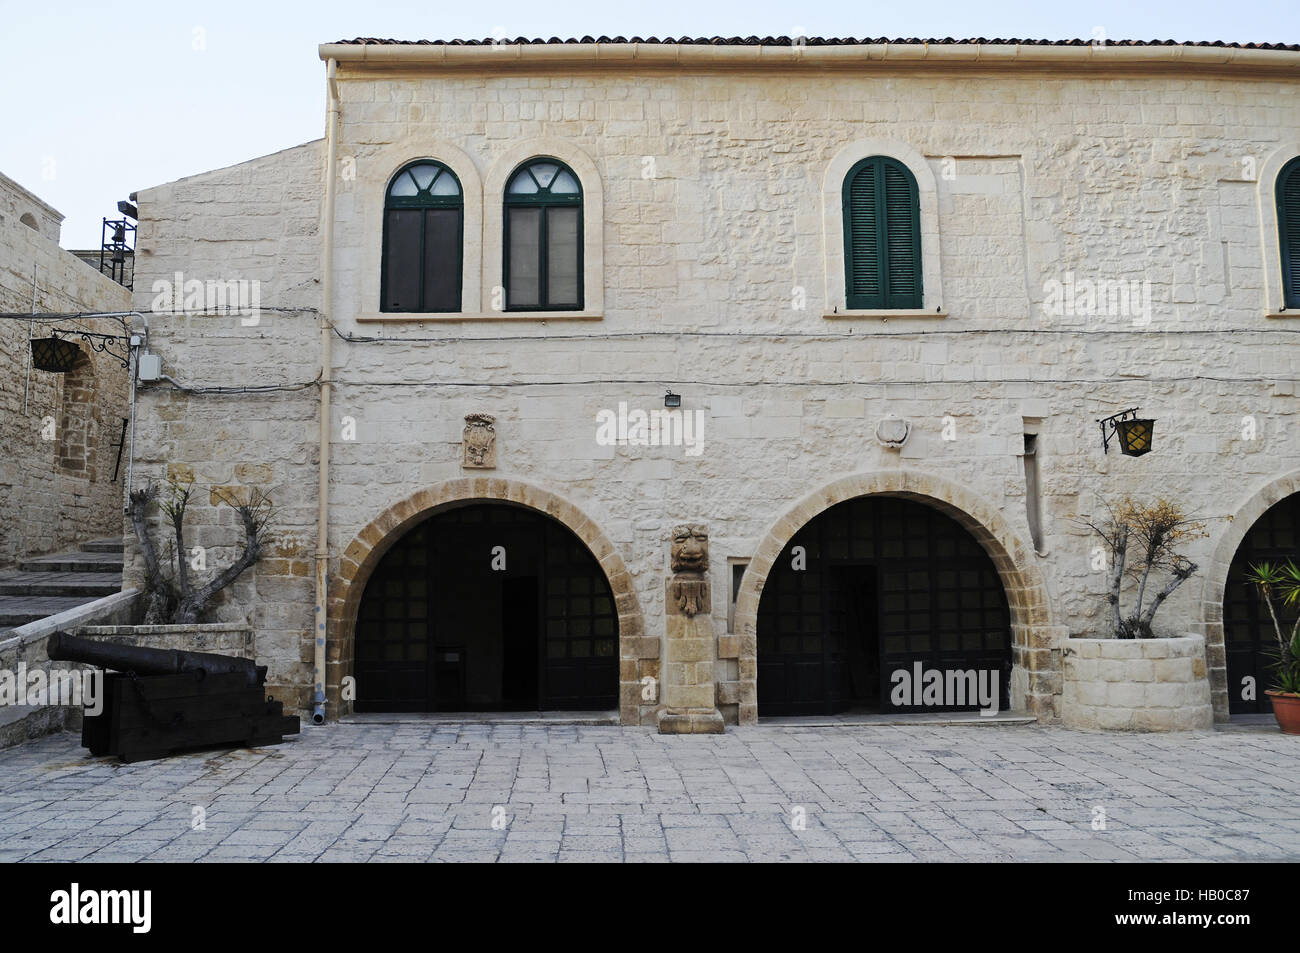 Castello Aragonese, castle, Taranto, Italy Stock Photo